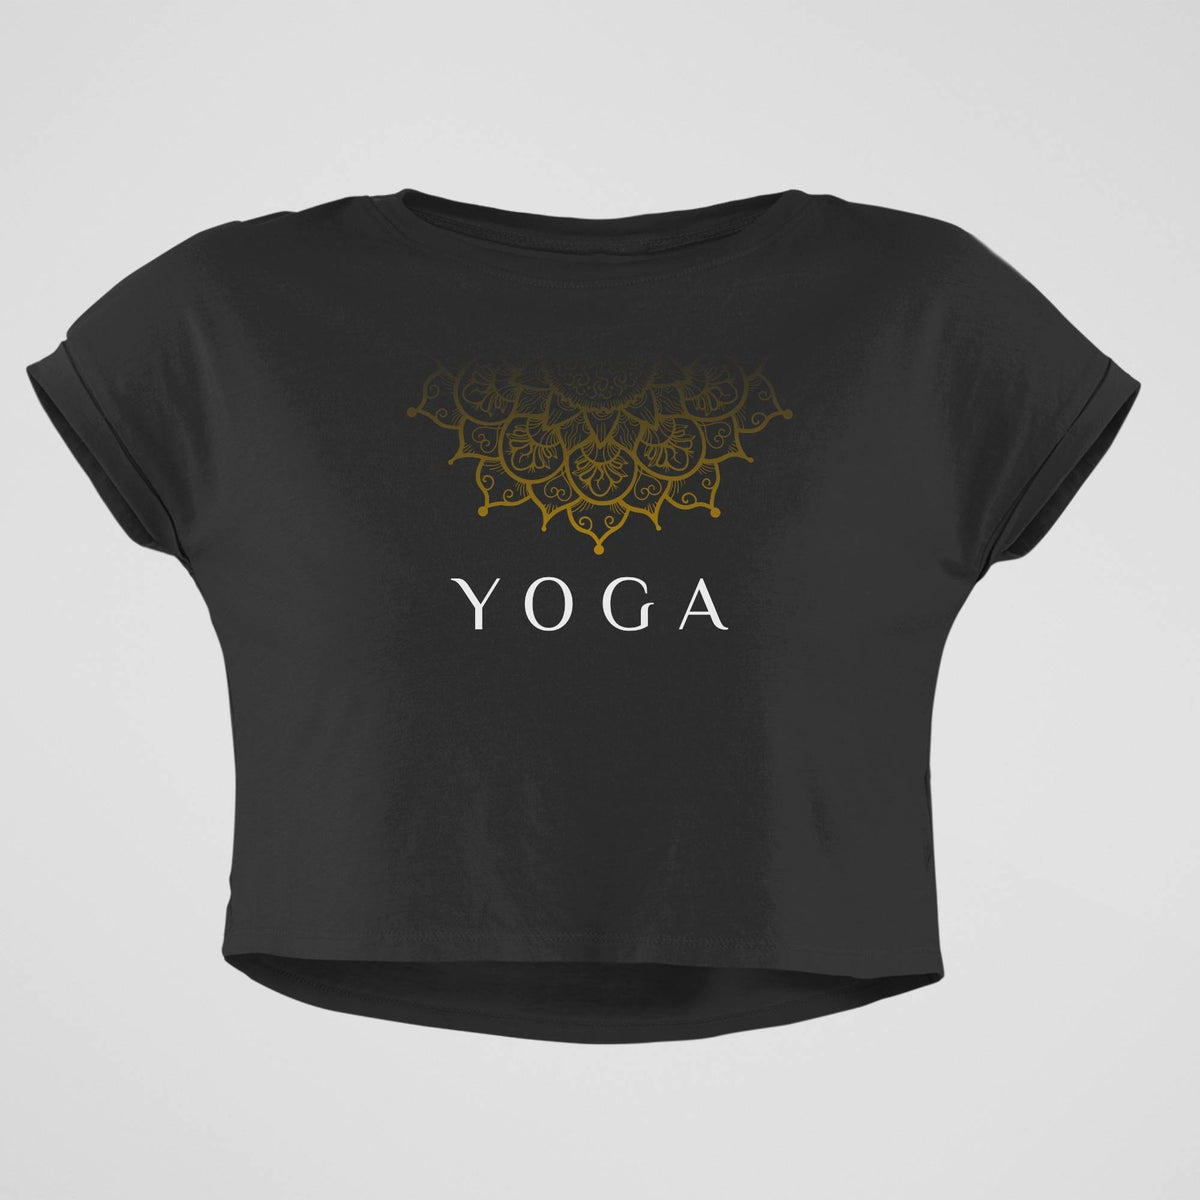 Yoga with mandala Black Crop Top